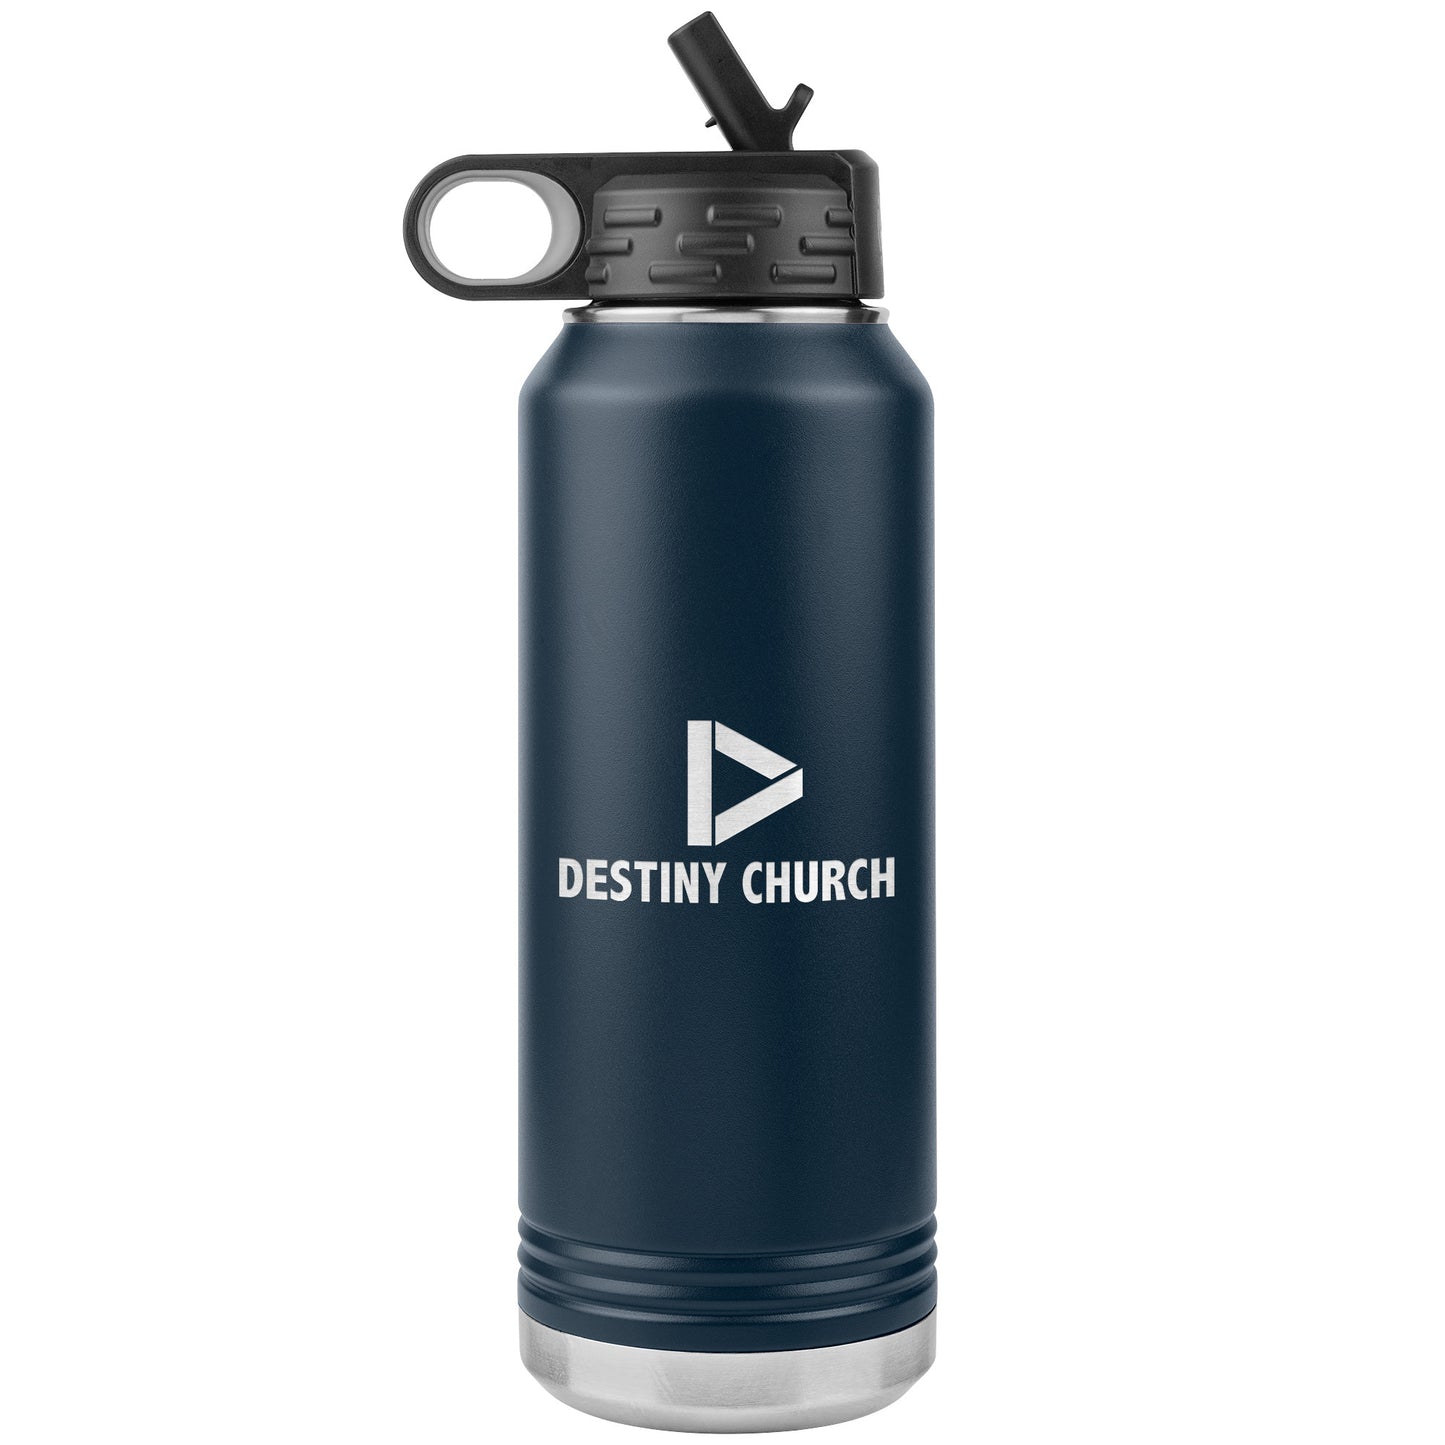 Destiny Church - Insulated Water Bottle